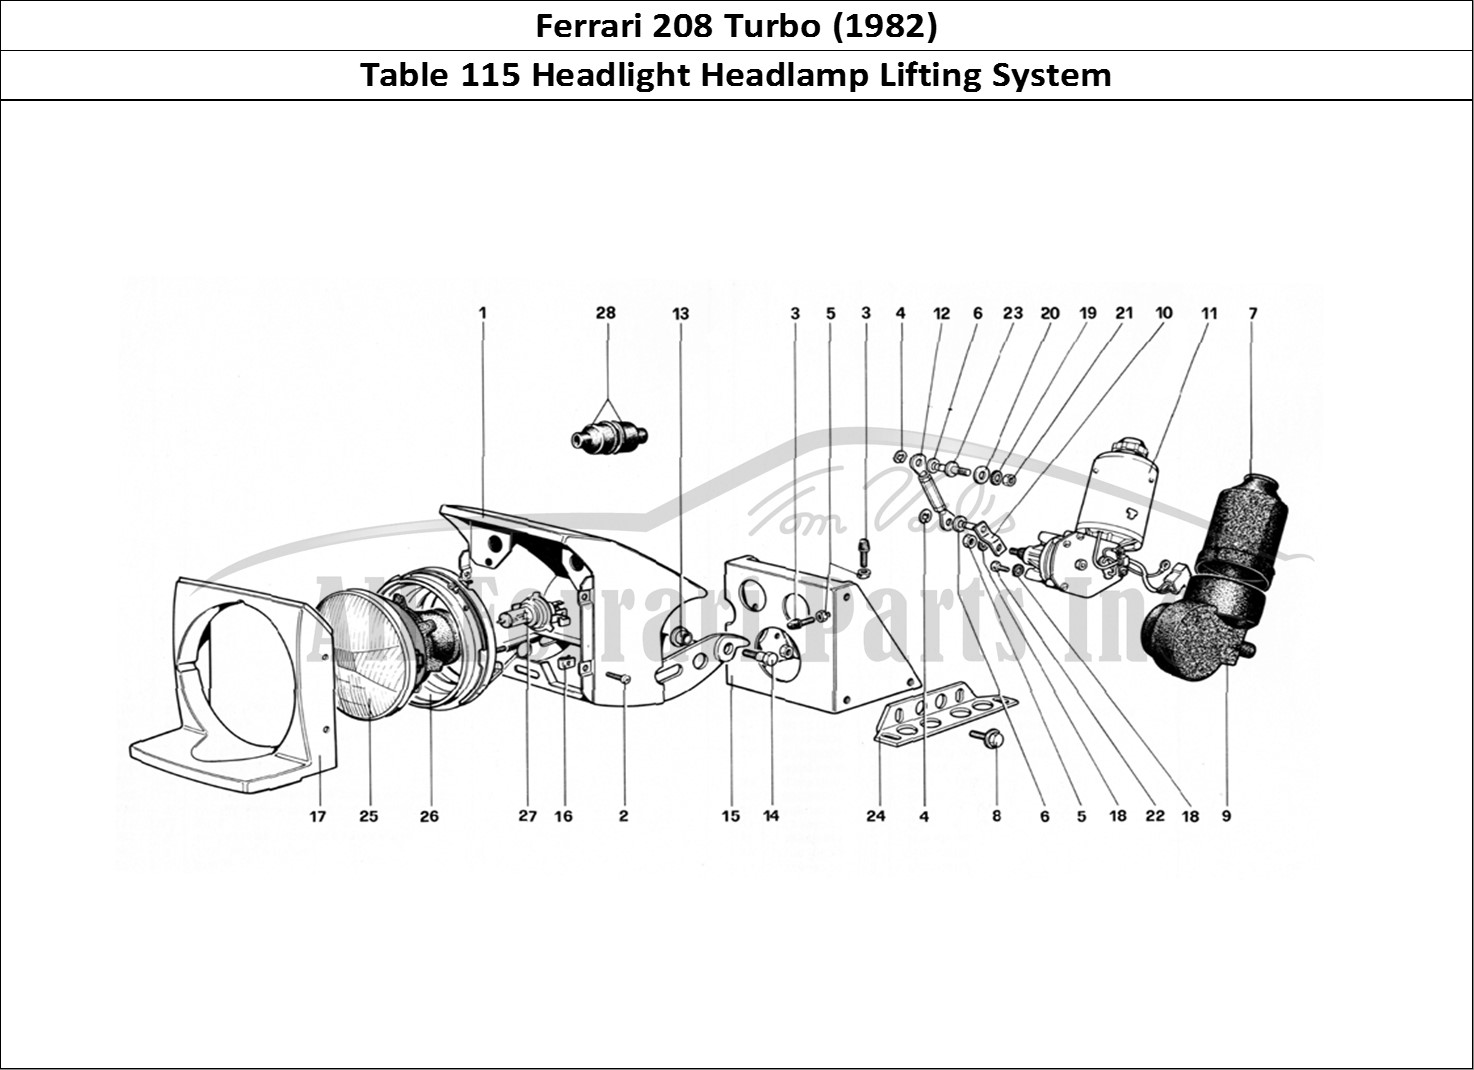 Ferrari Parts Ferrari 208 Turbo (1982) Page 115 Lights Lifting Device and